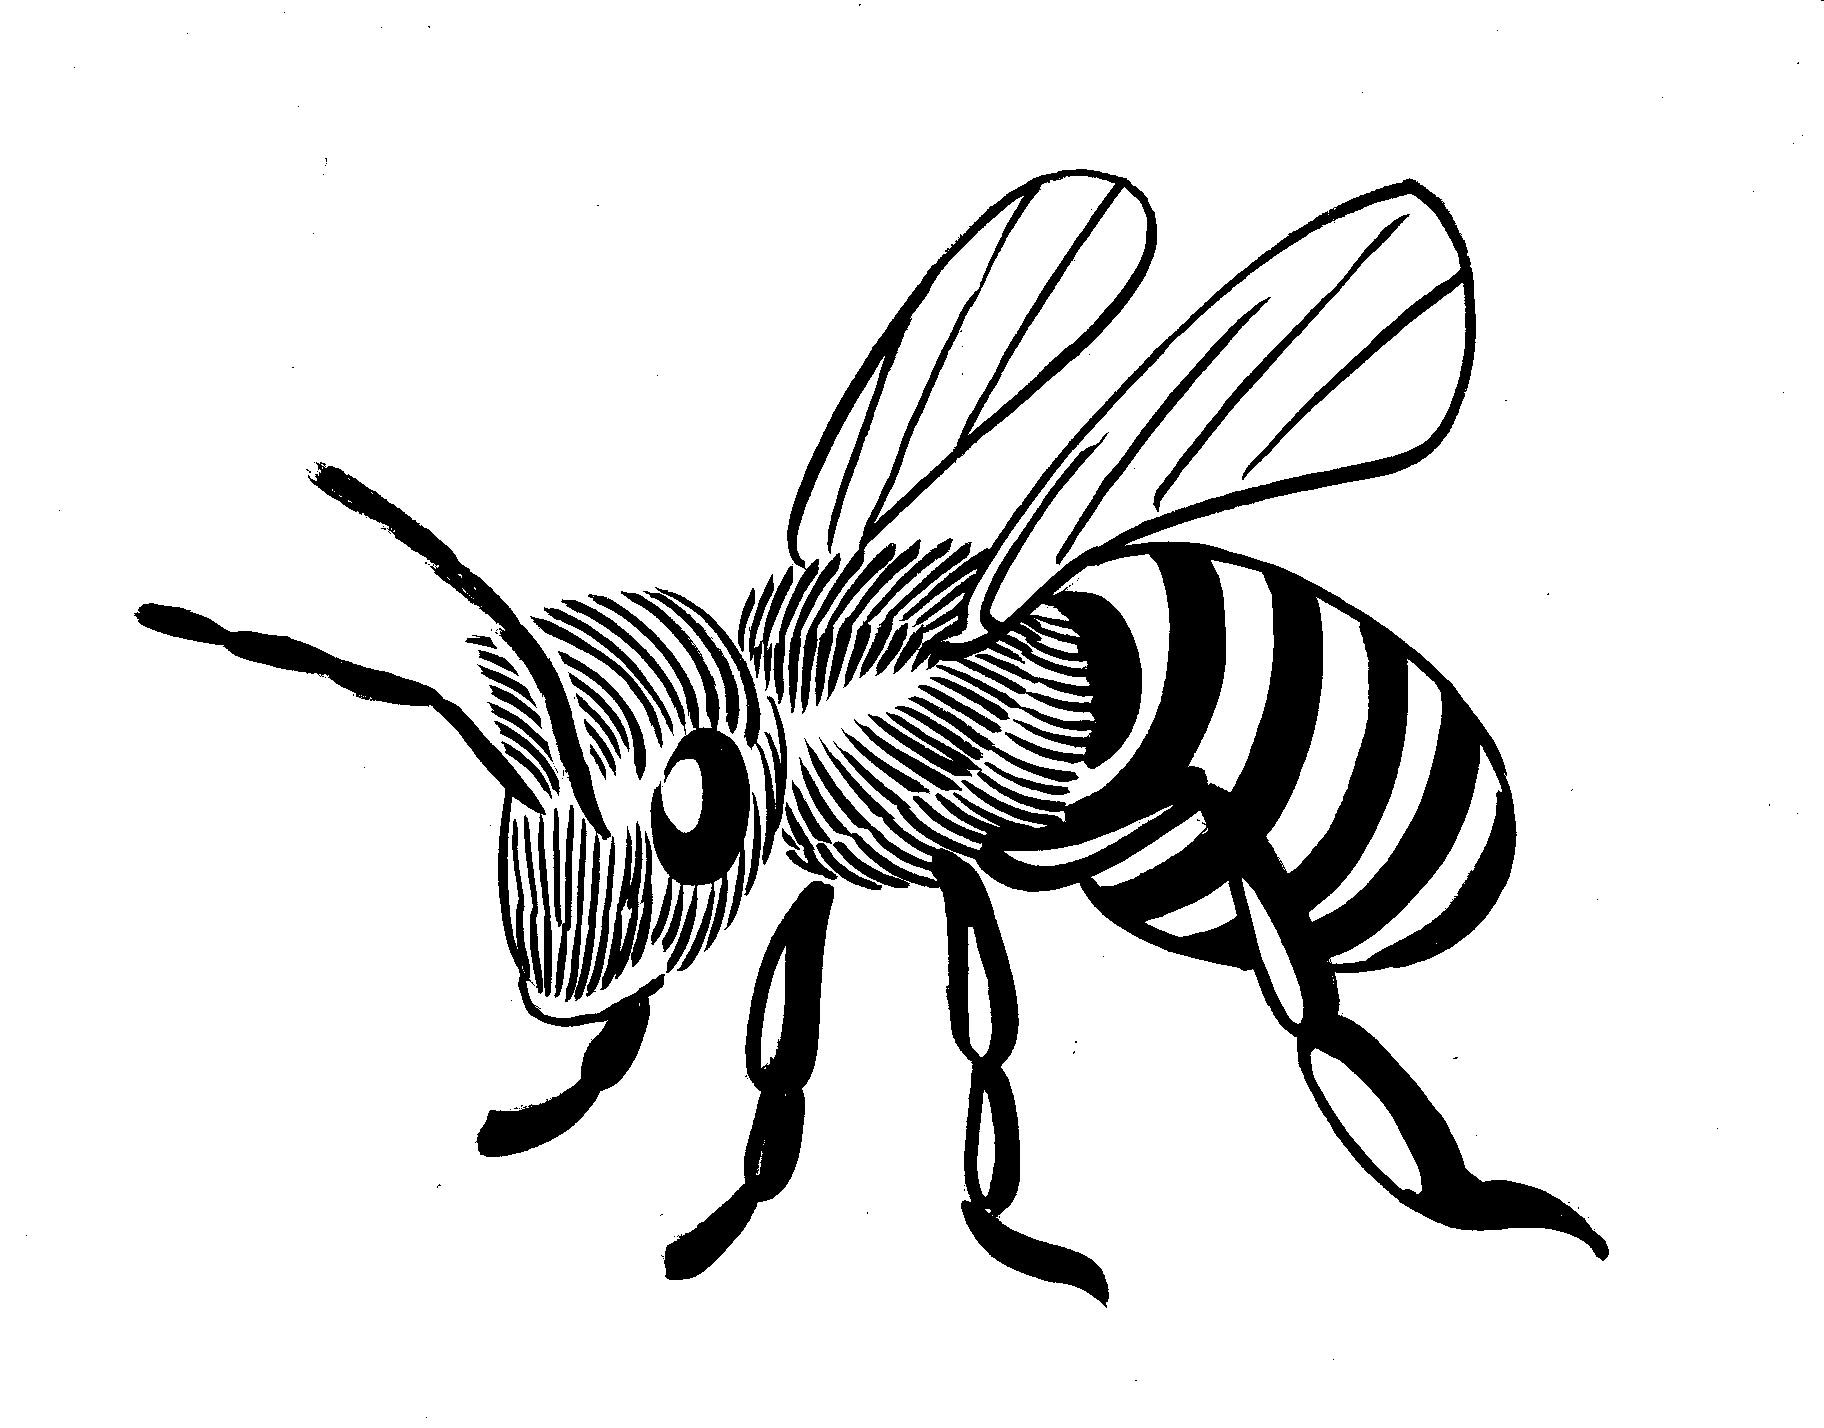 More Bugs & Animals | Steve Lafler Comics & Illustration